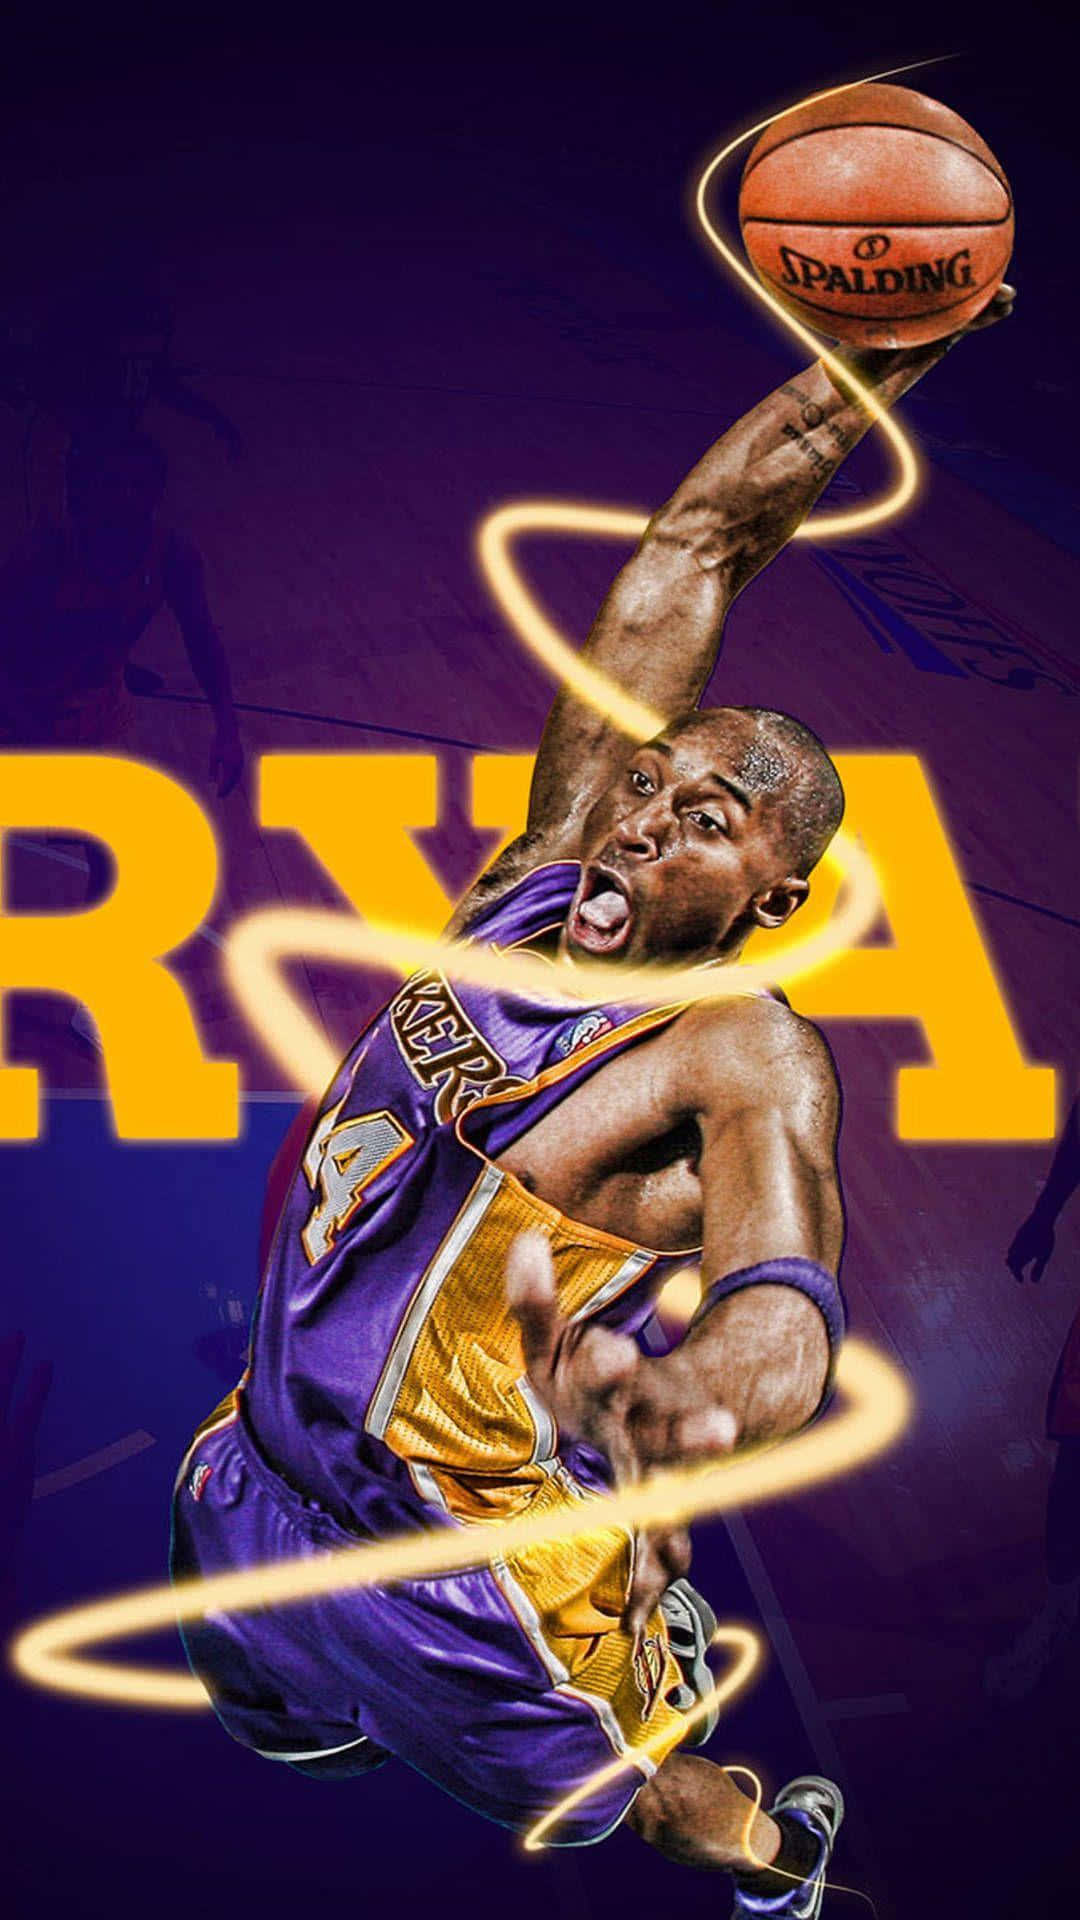 Kobe Bryant - a legend forever remembered